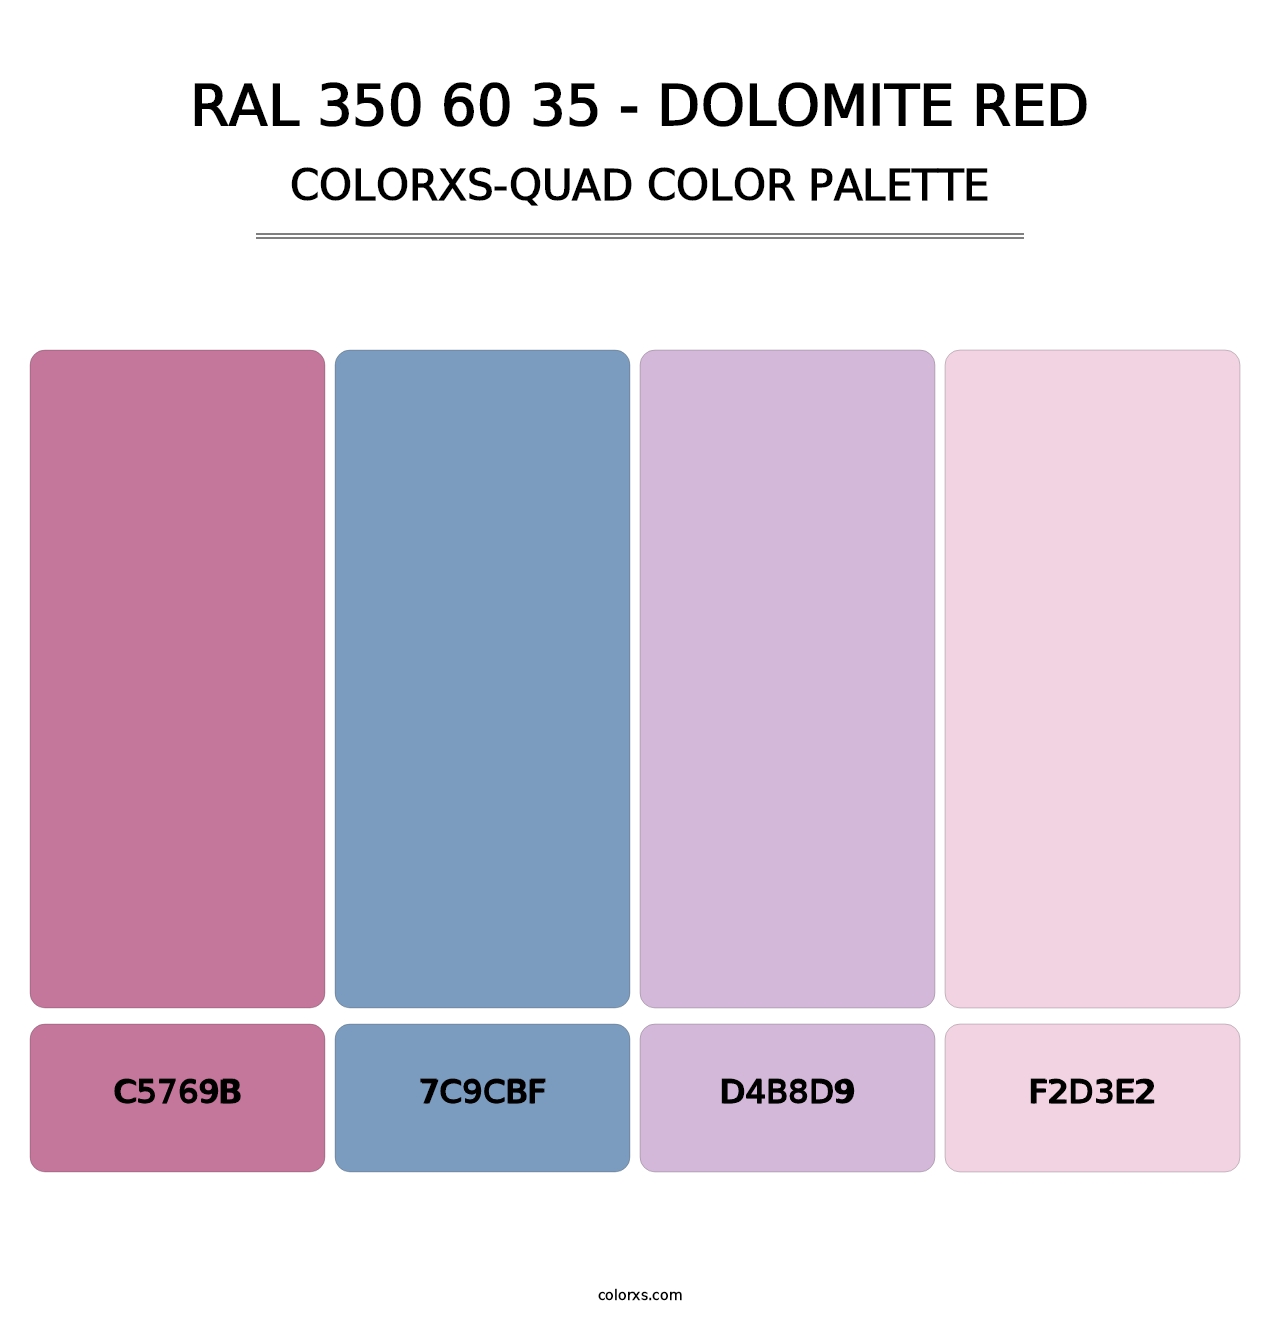 RAL 350 60 35 - Dolomite Red - Colorxs Quad Palette